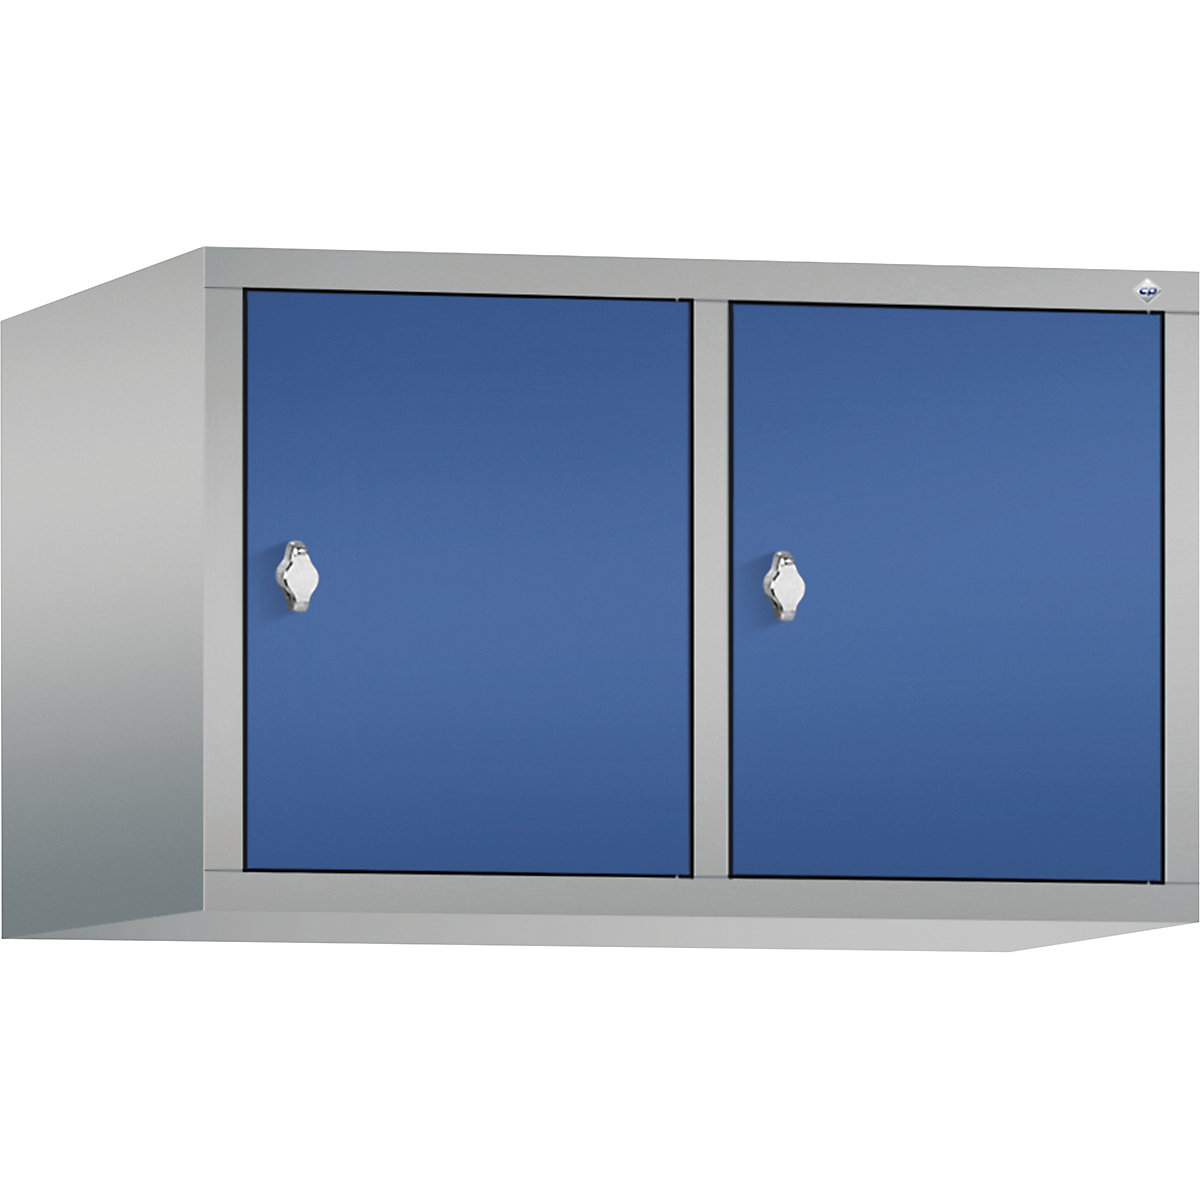 C+P – Altillo CLASSIC, 2 compartimentos, anchura de compartimento 400 mm, aluminio blanco / azul genciana